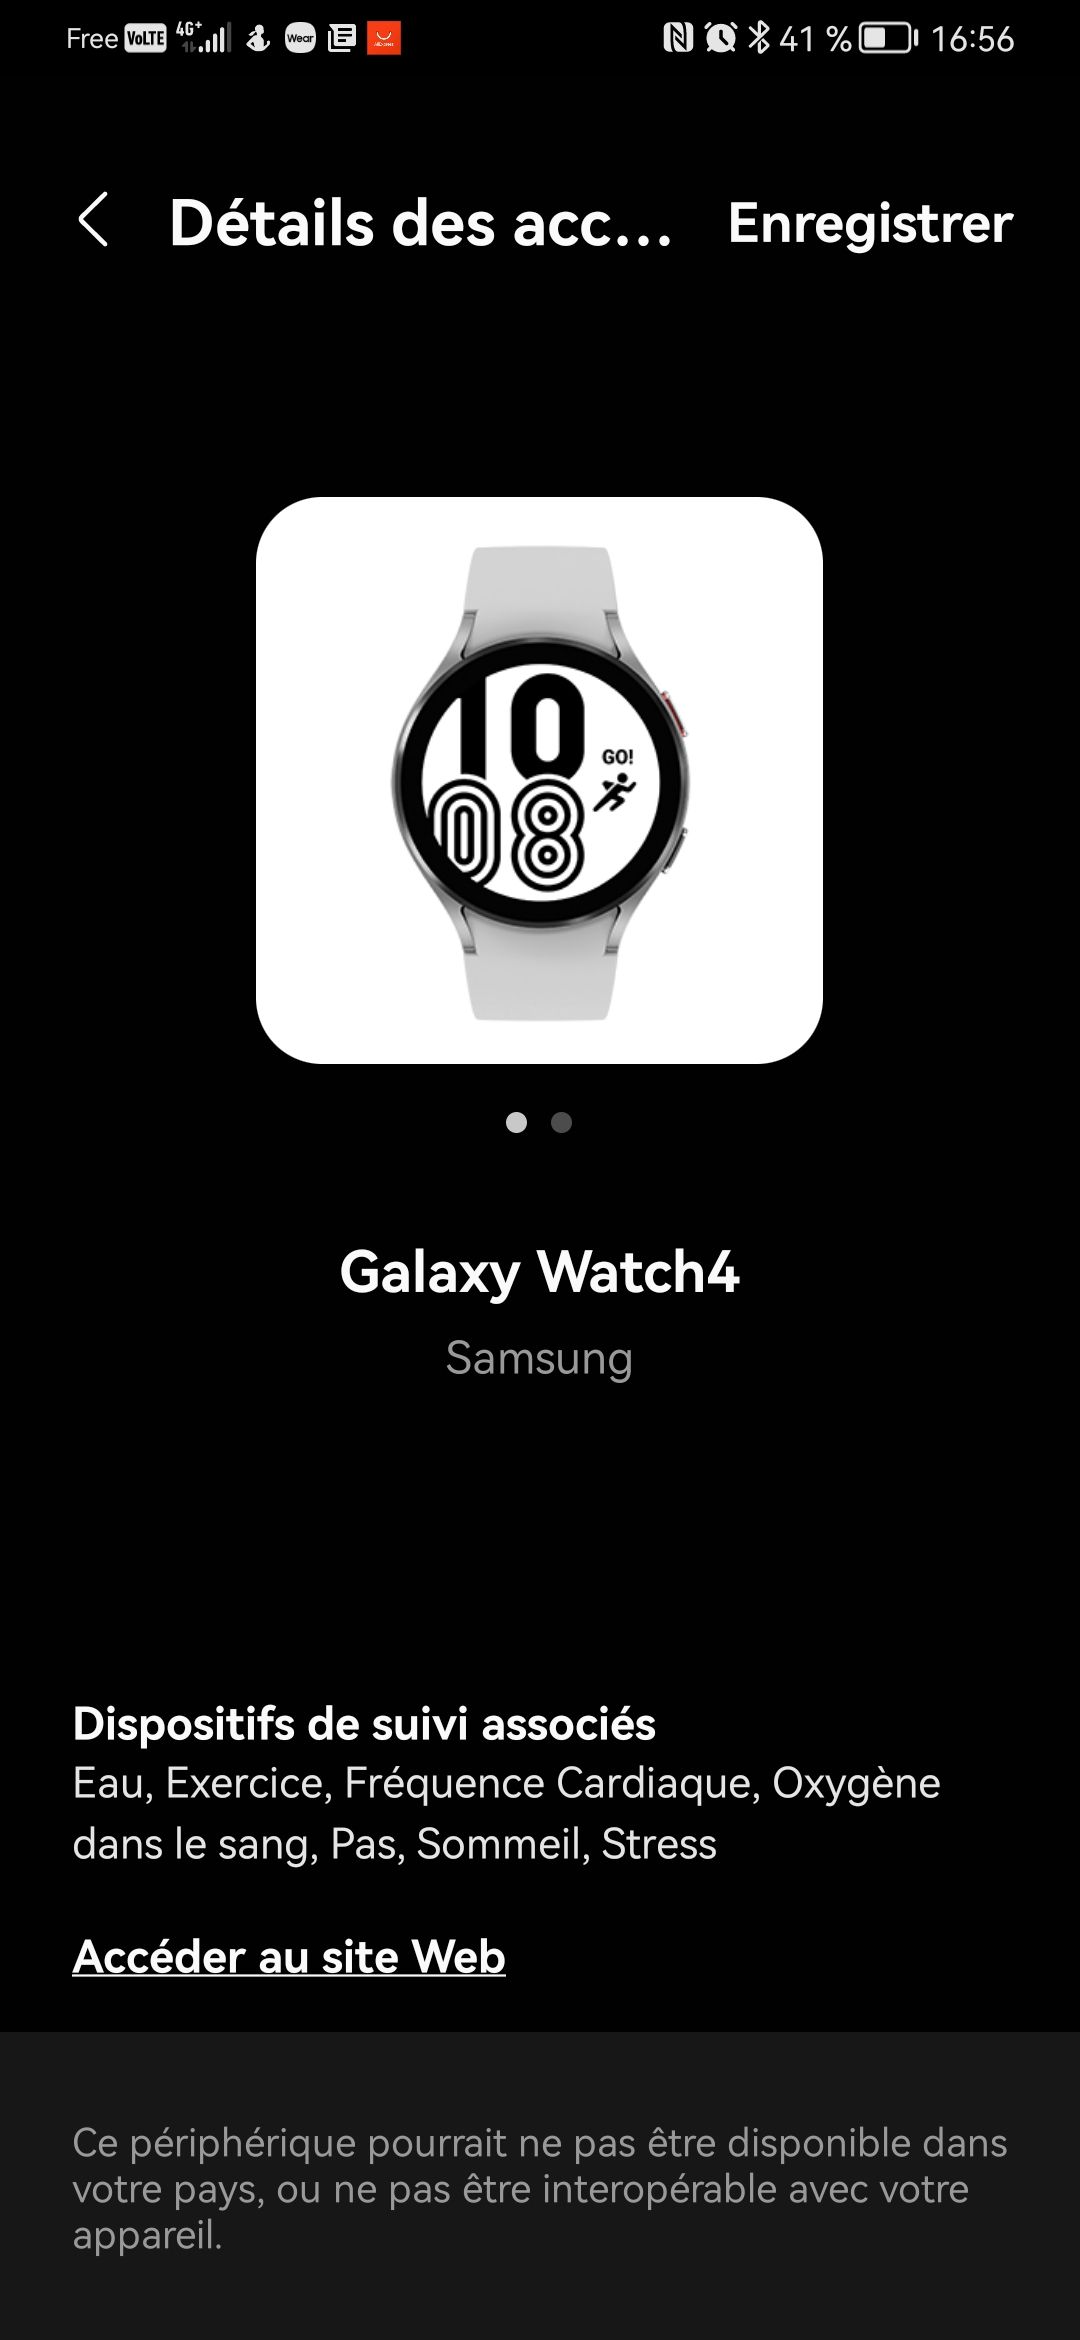 Résolu : Galaxy Watch 4 et Huawei P30 - Page 5 - Samsung Community